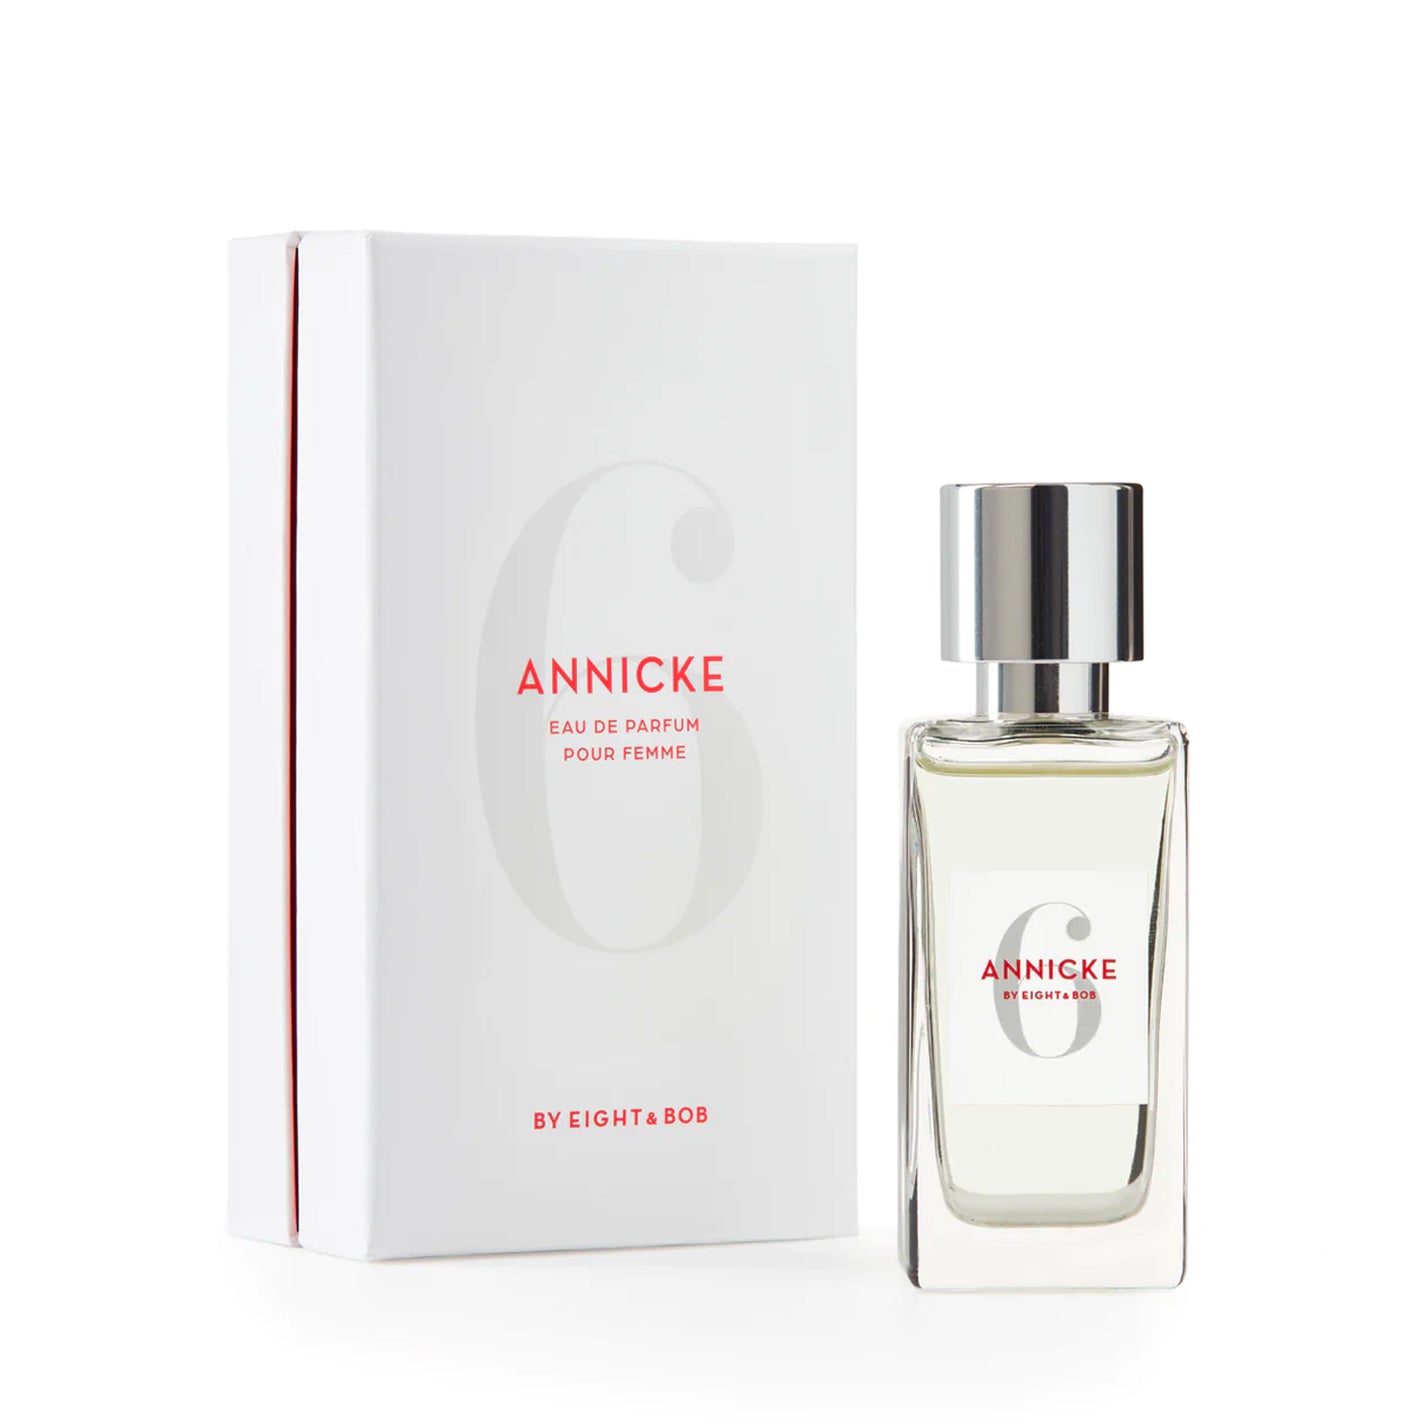 Eight & Bob Annicke #6 Eau de Parfum - 30ml